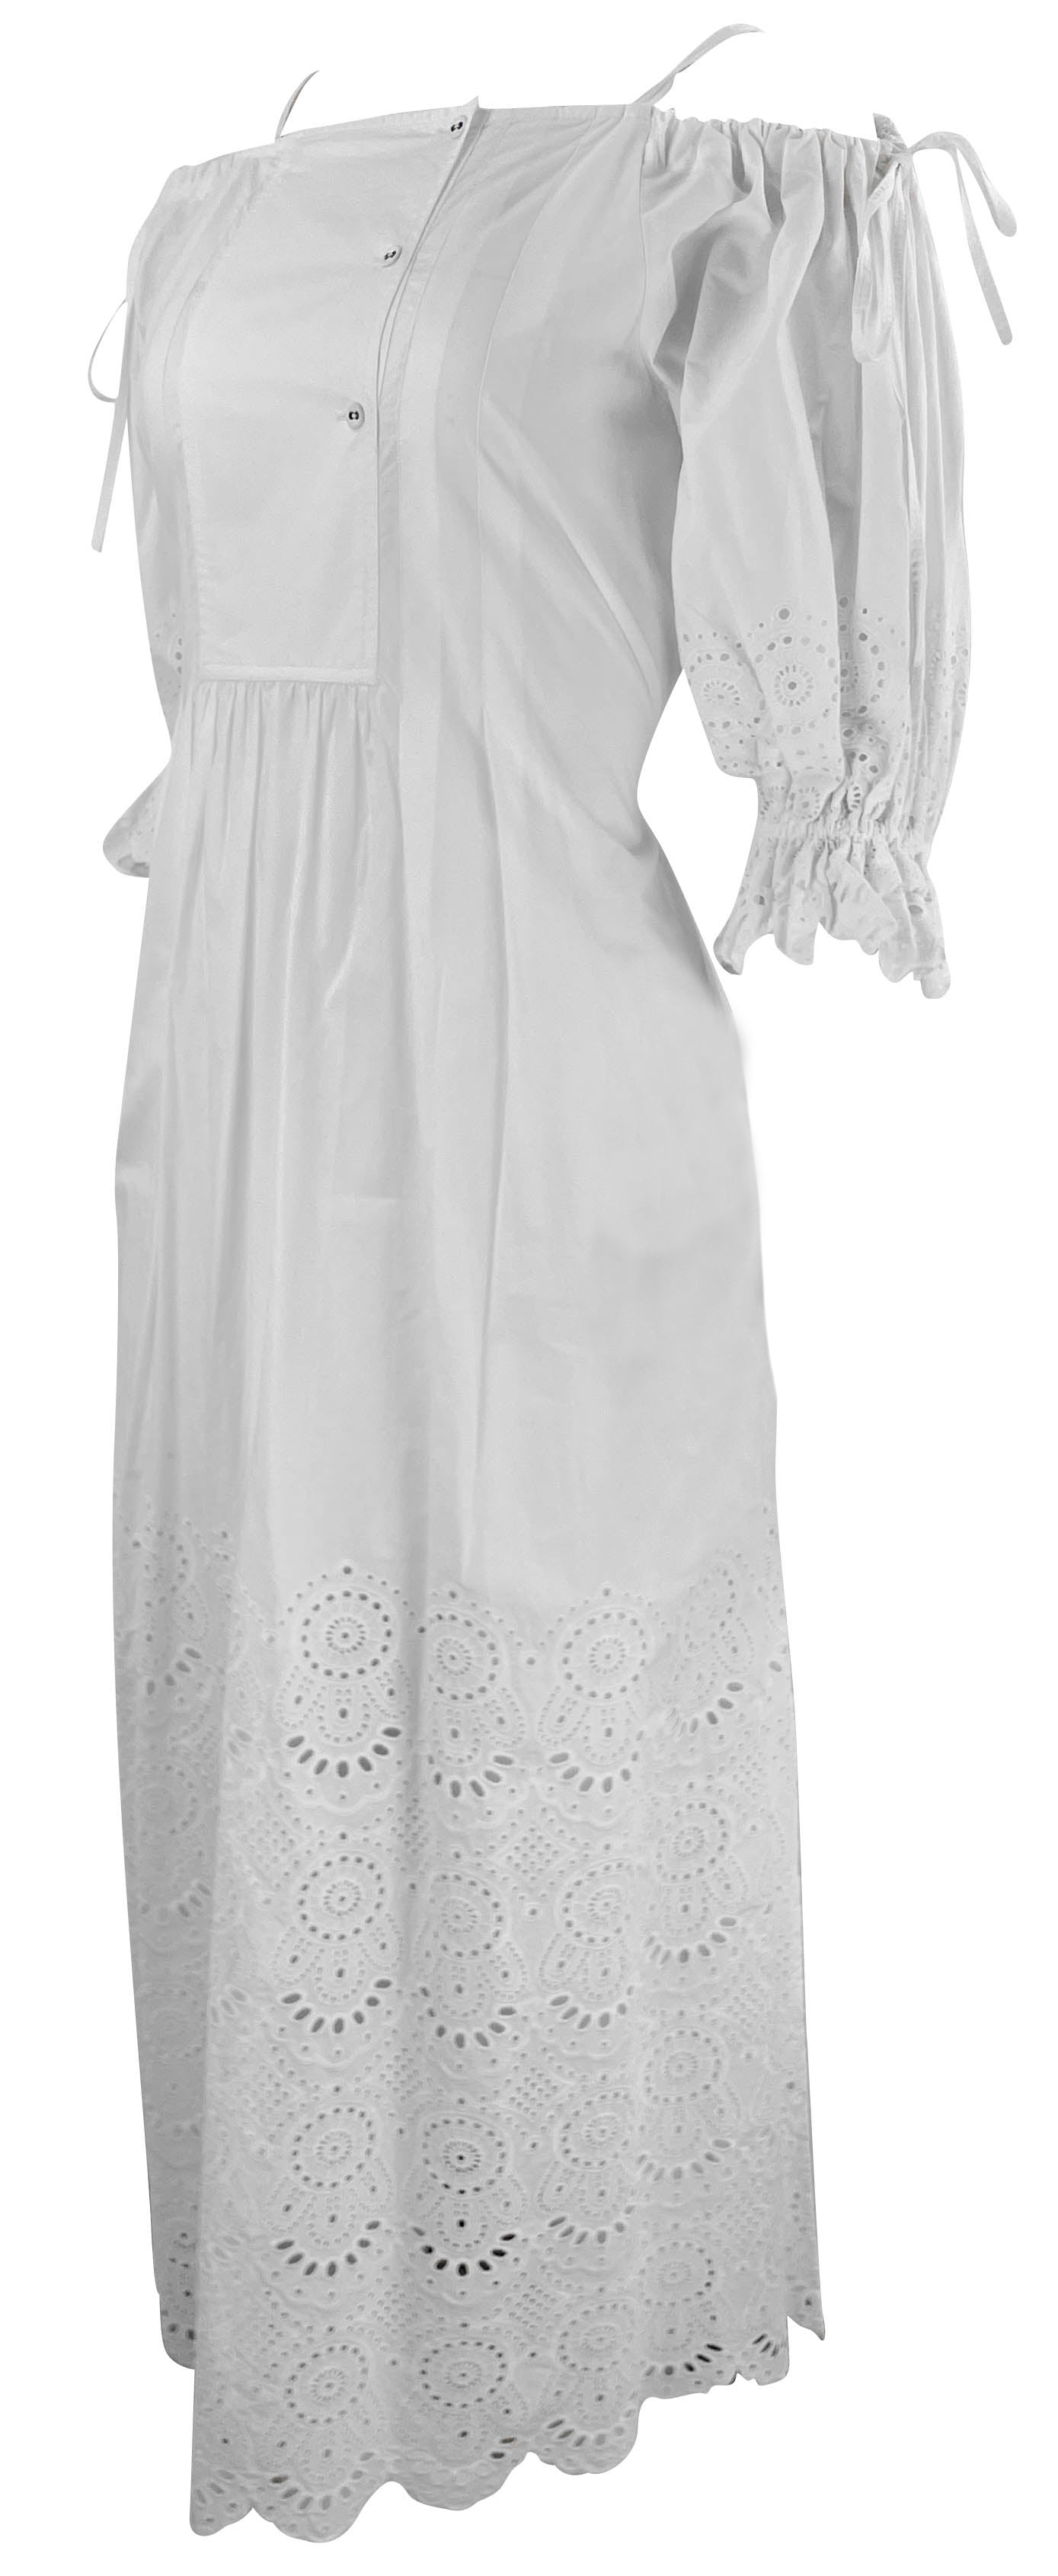 Ulla Johnson Narcisa Eyelet Dress in White - Discounts on Ulla Johnson at UAL